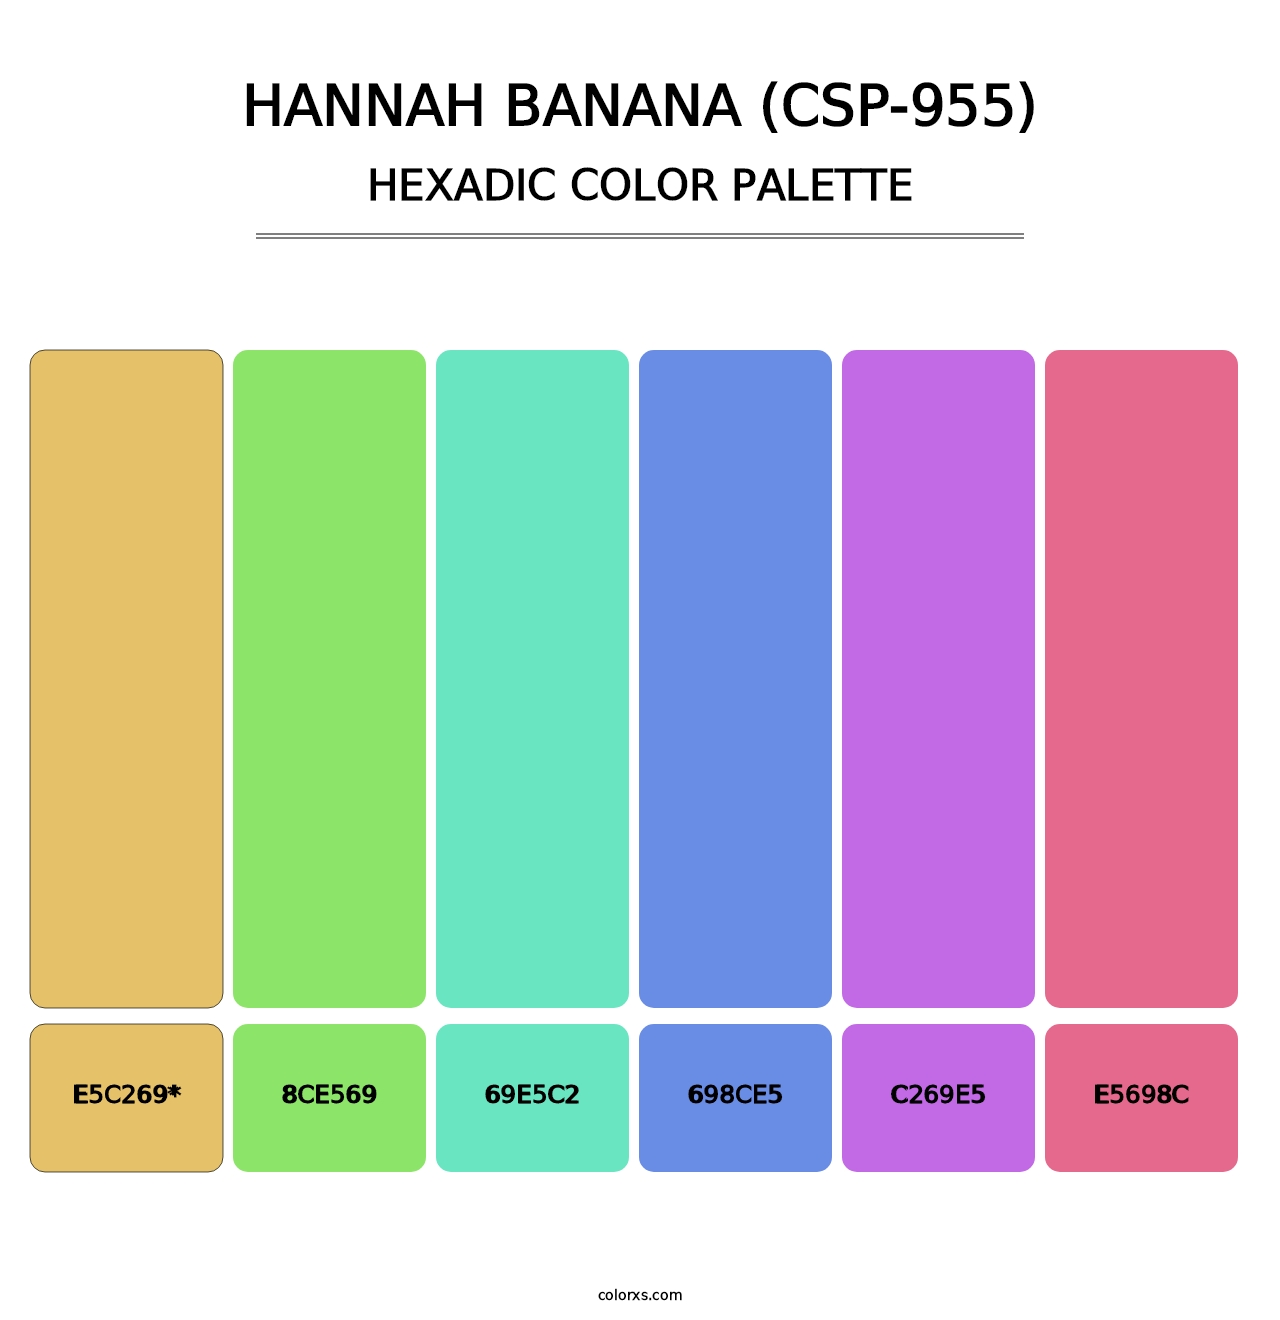 Hannah Banana (CSP-955) - Hexadic Color Palette